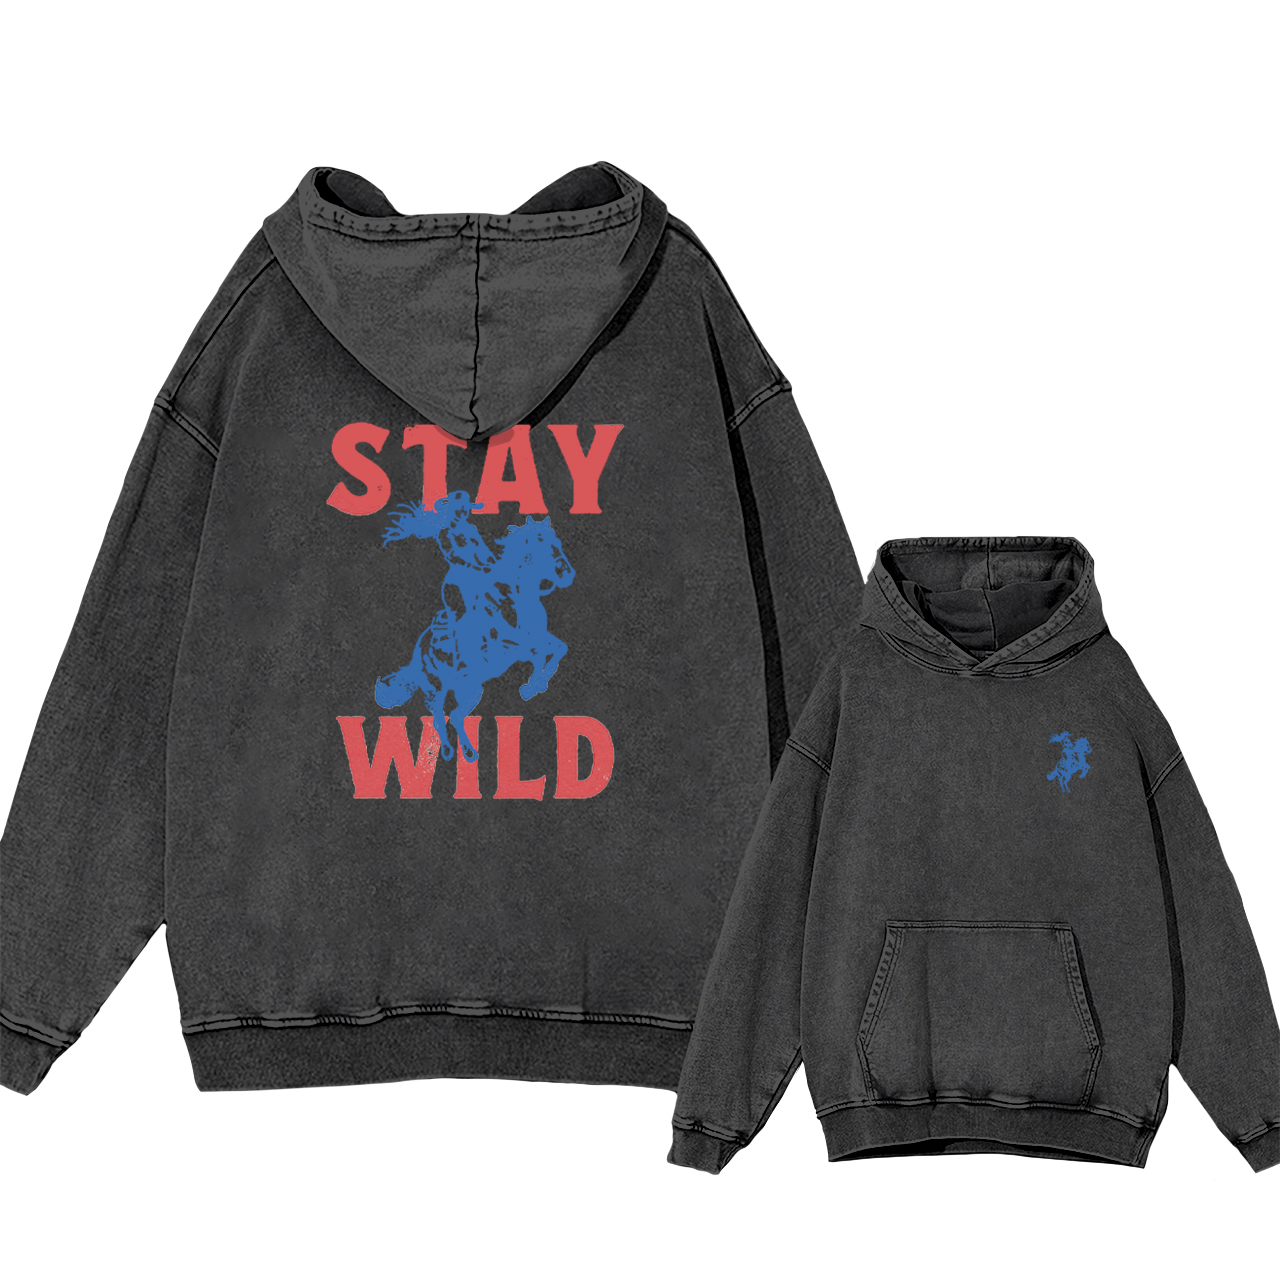 Stay Wild Cowgirls Garment-Dye Hoodies